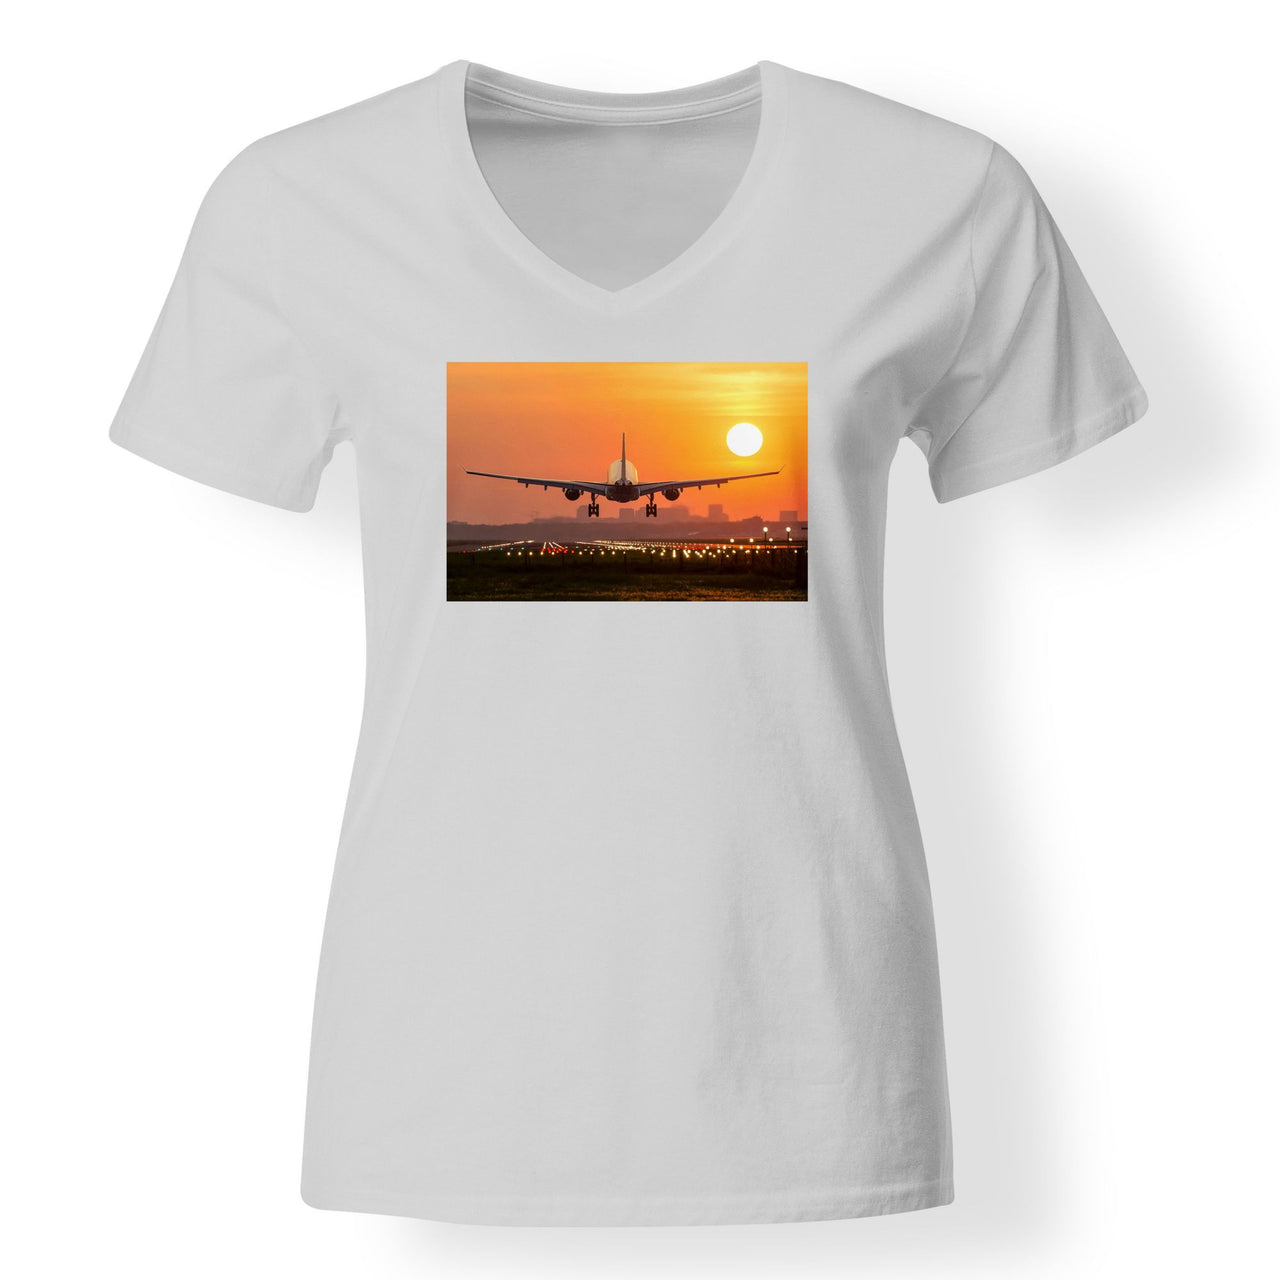 Amazing Airbus A330 Landing at Sunset Designed V-Neck T-Shirts